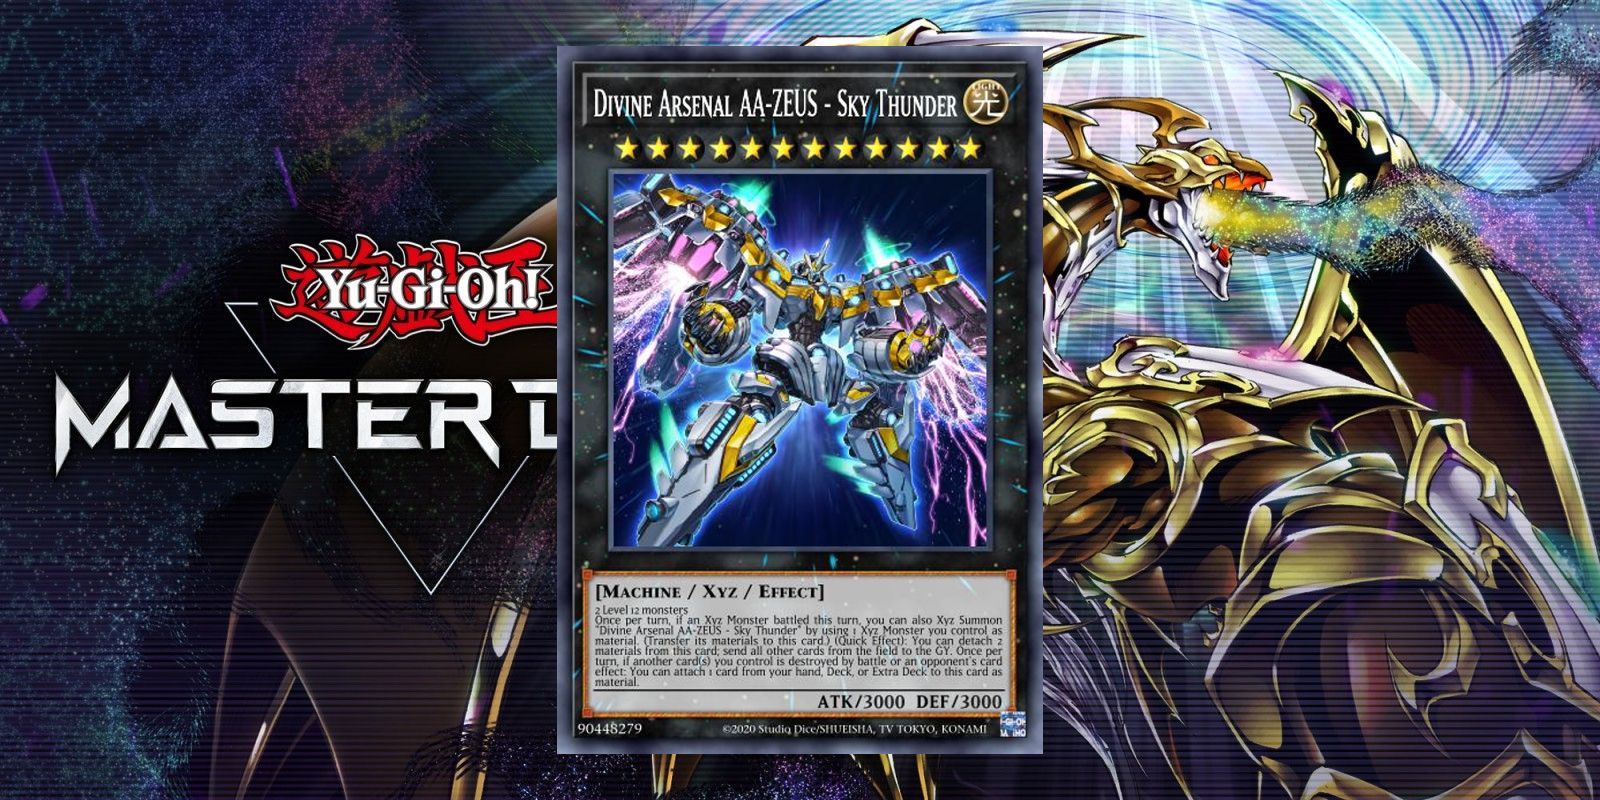 Yu-Gi-Oh Master Duel Divine Arsenal AA-Zeus - Sky Thunder